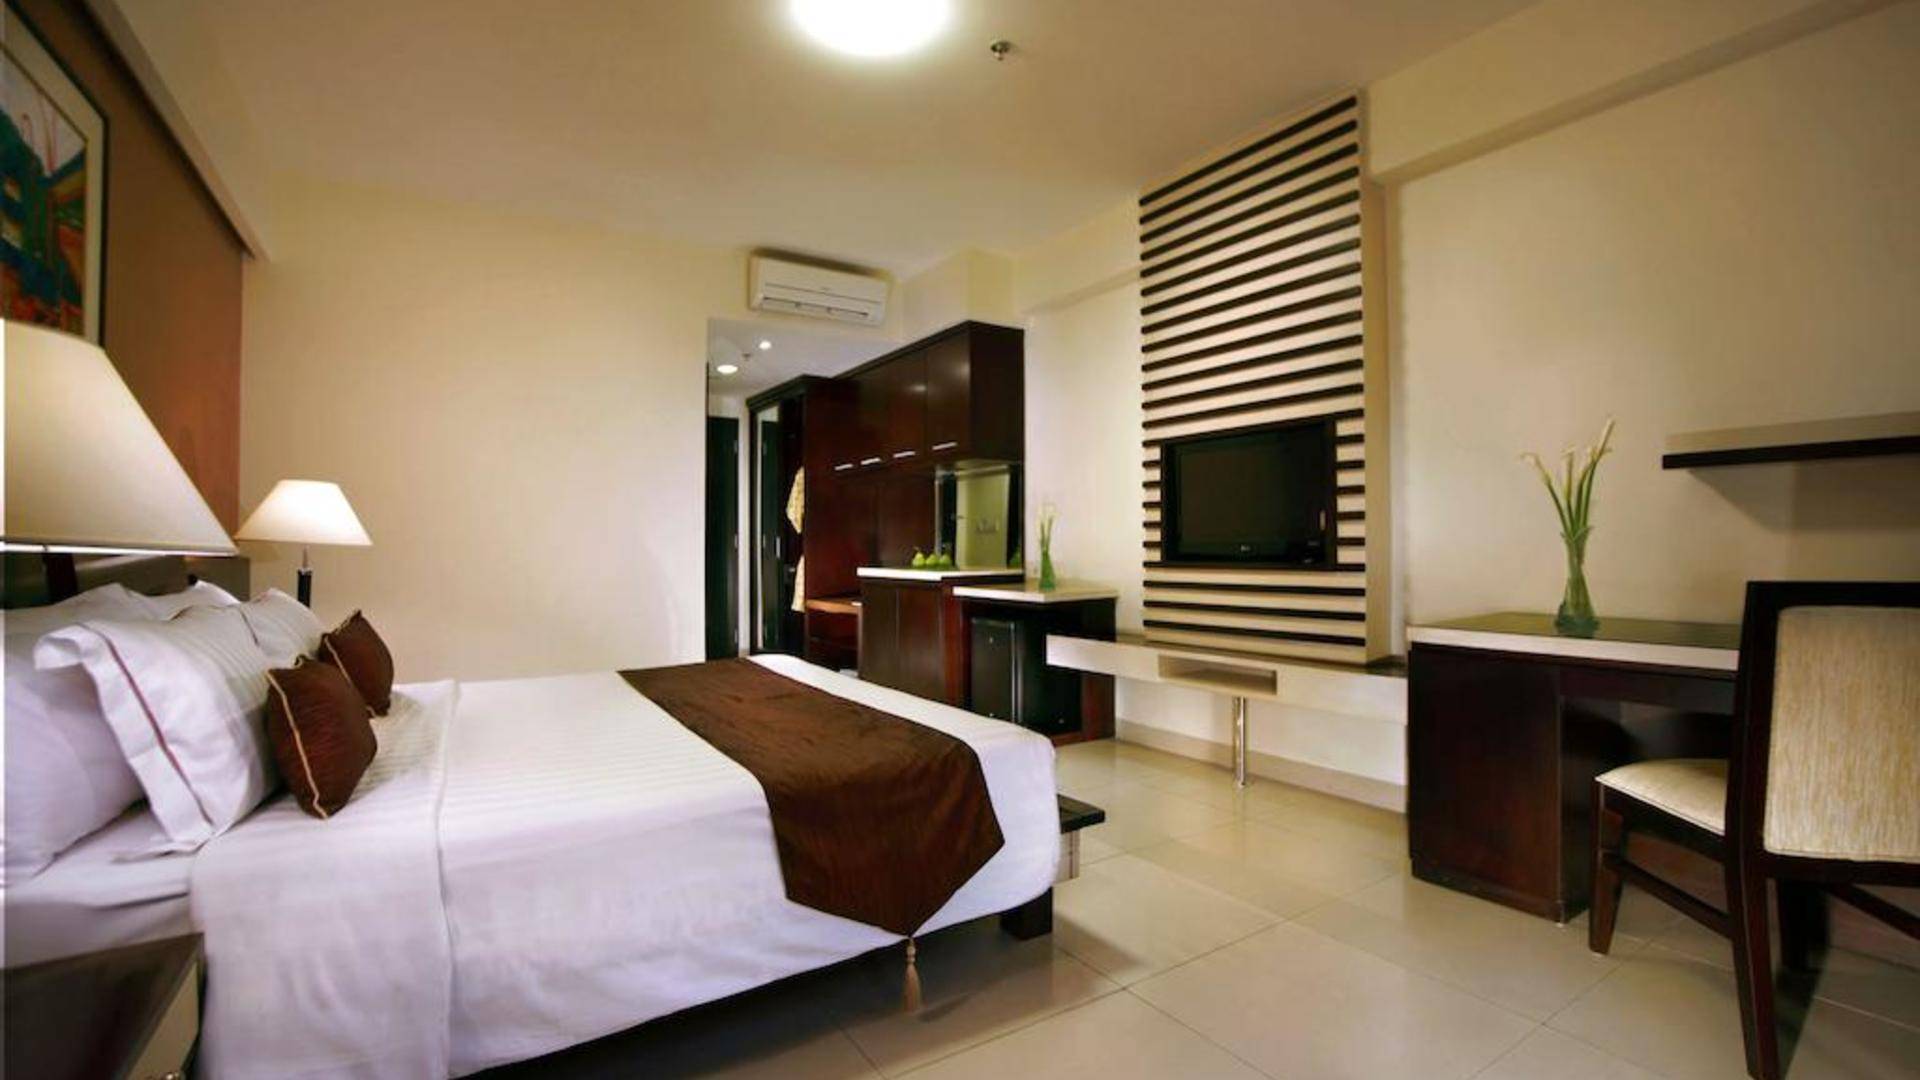 Aston kuta hotel - residence 4* - индонезия, бали - отели | пегас туристик